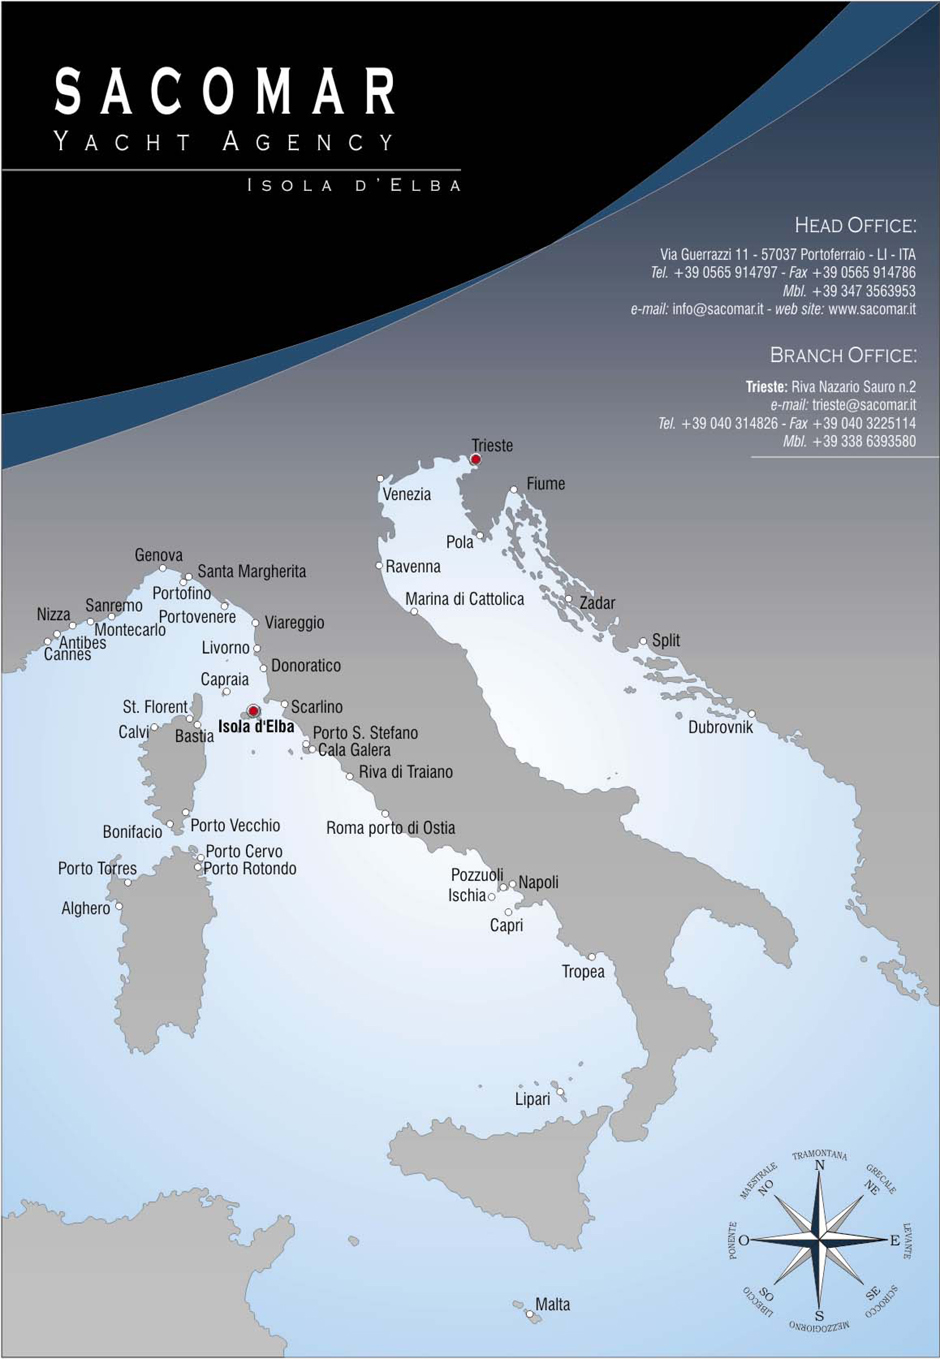 Sacomar Yacht Agency Operation Area Map